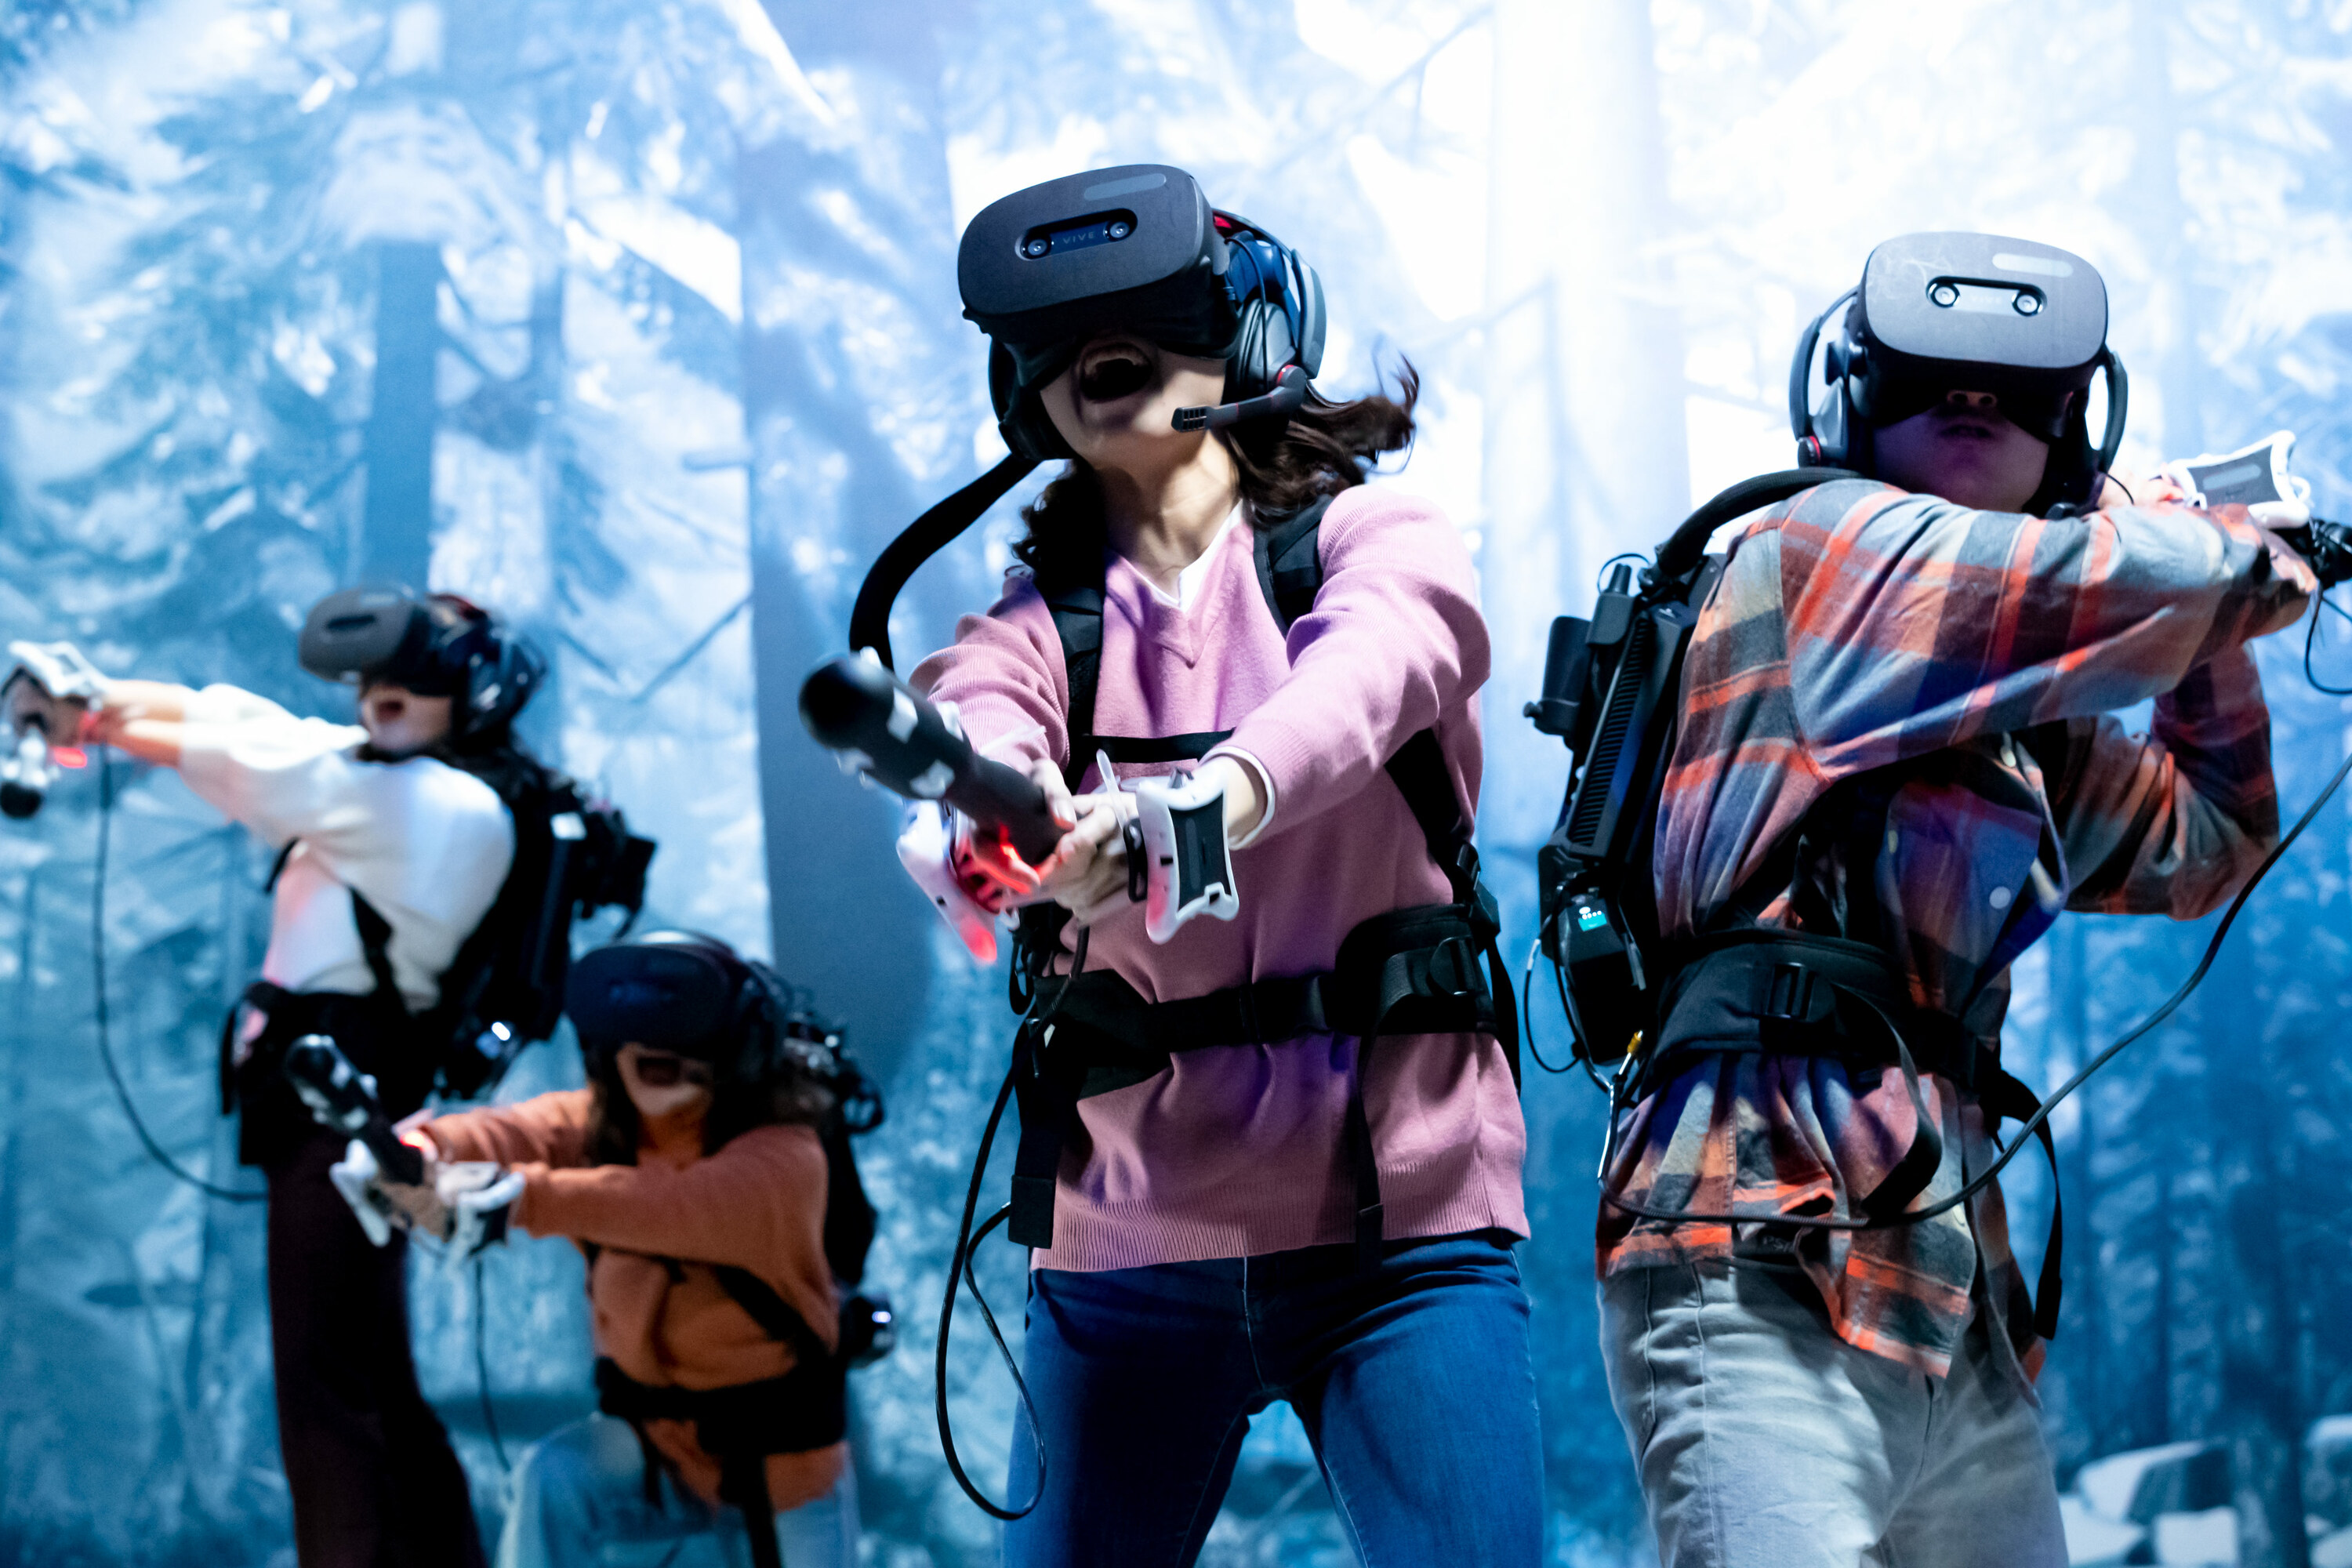 VR Demon Slayer Ride to Open at Universal Studios Japan in September, MOSHI MOSHI NIPPON